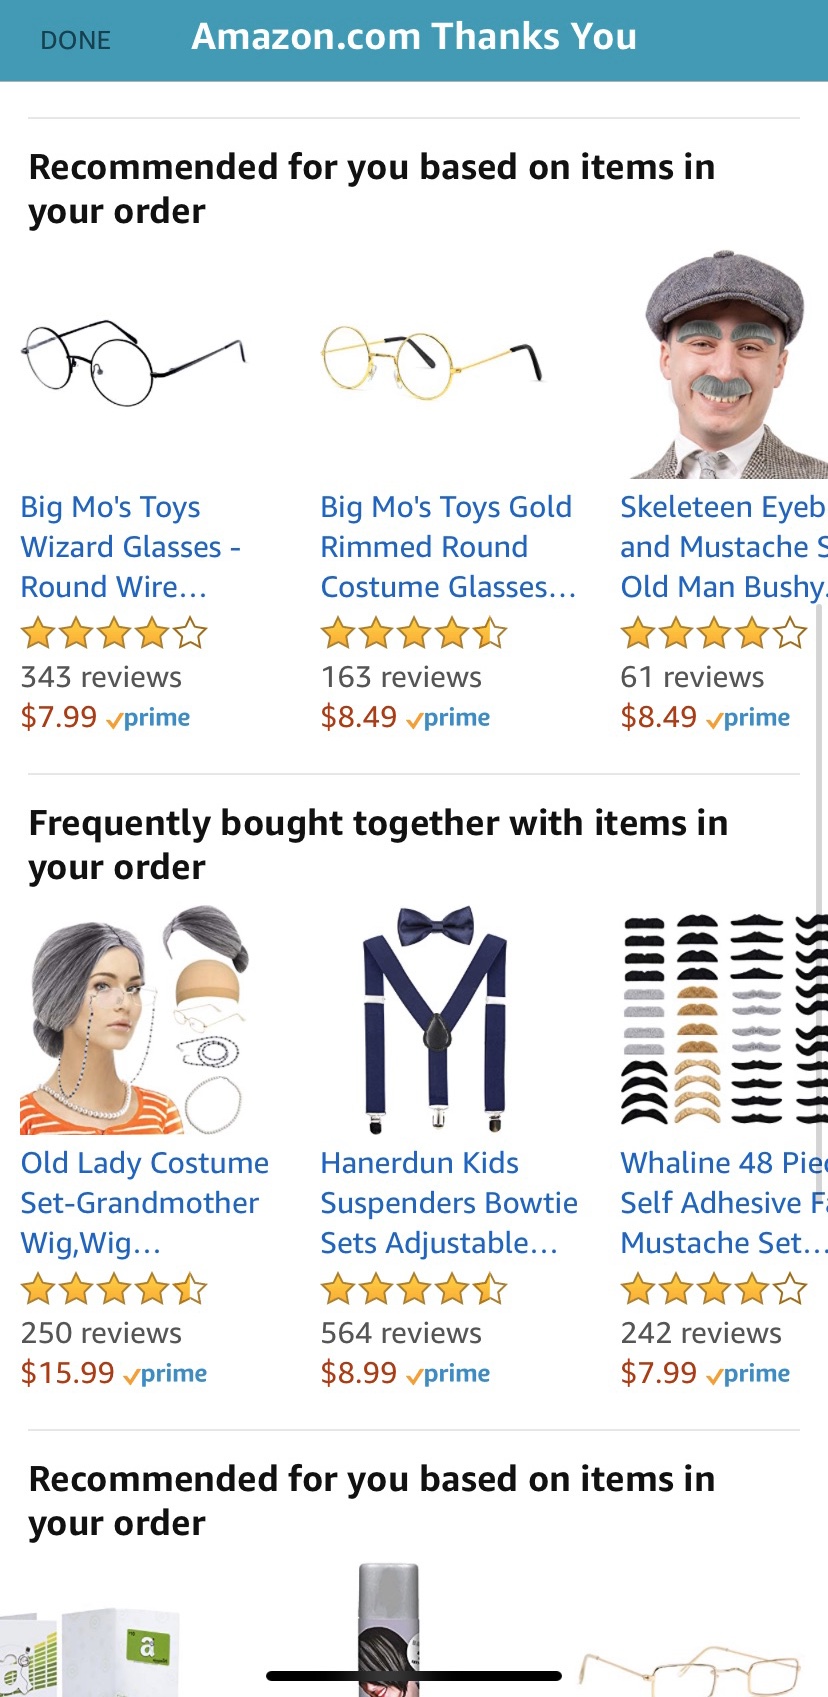 Image of "old people" costumes on Amazon.